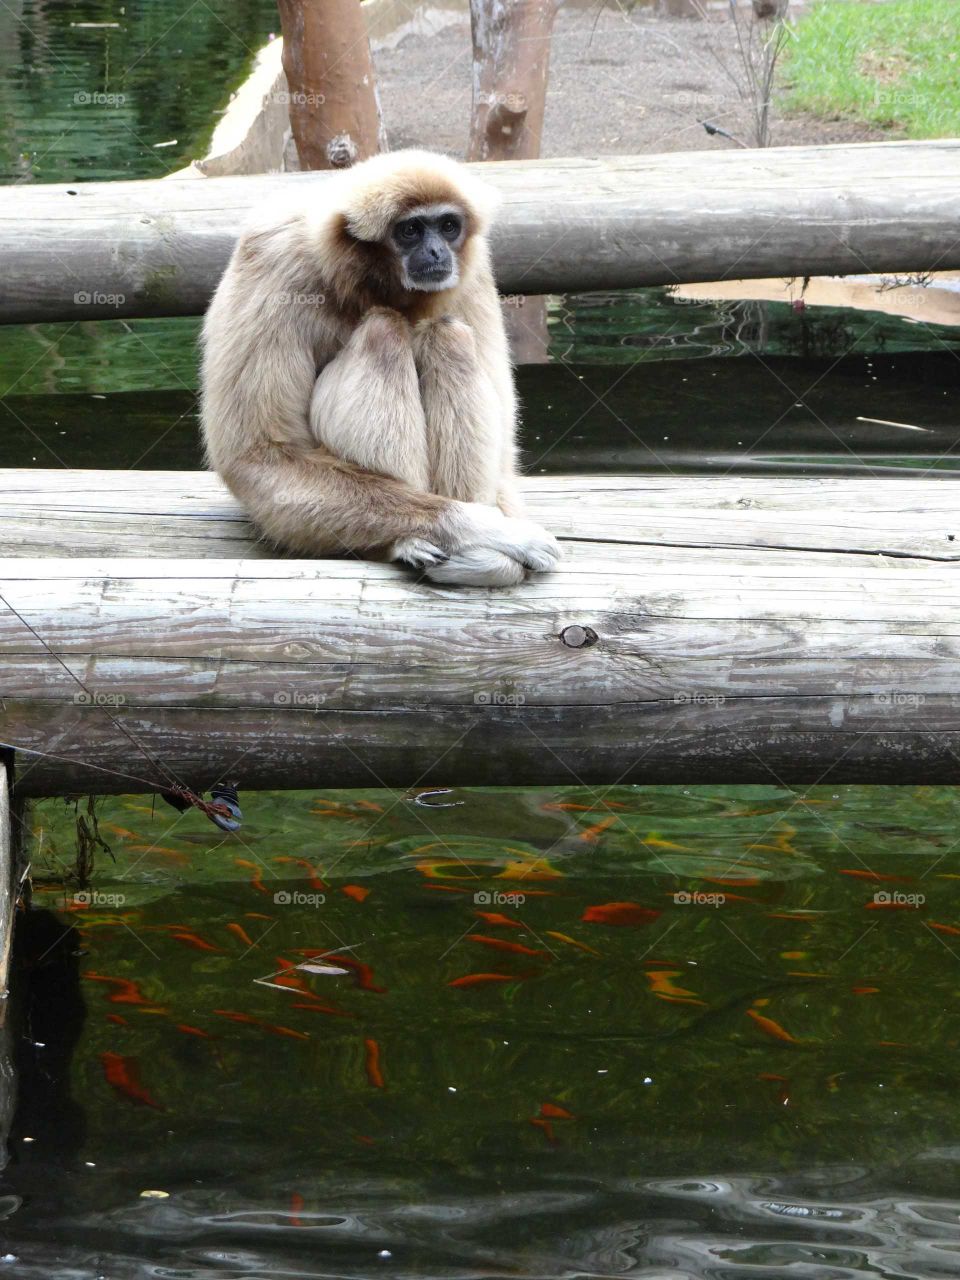 Monkey so sad